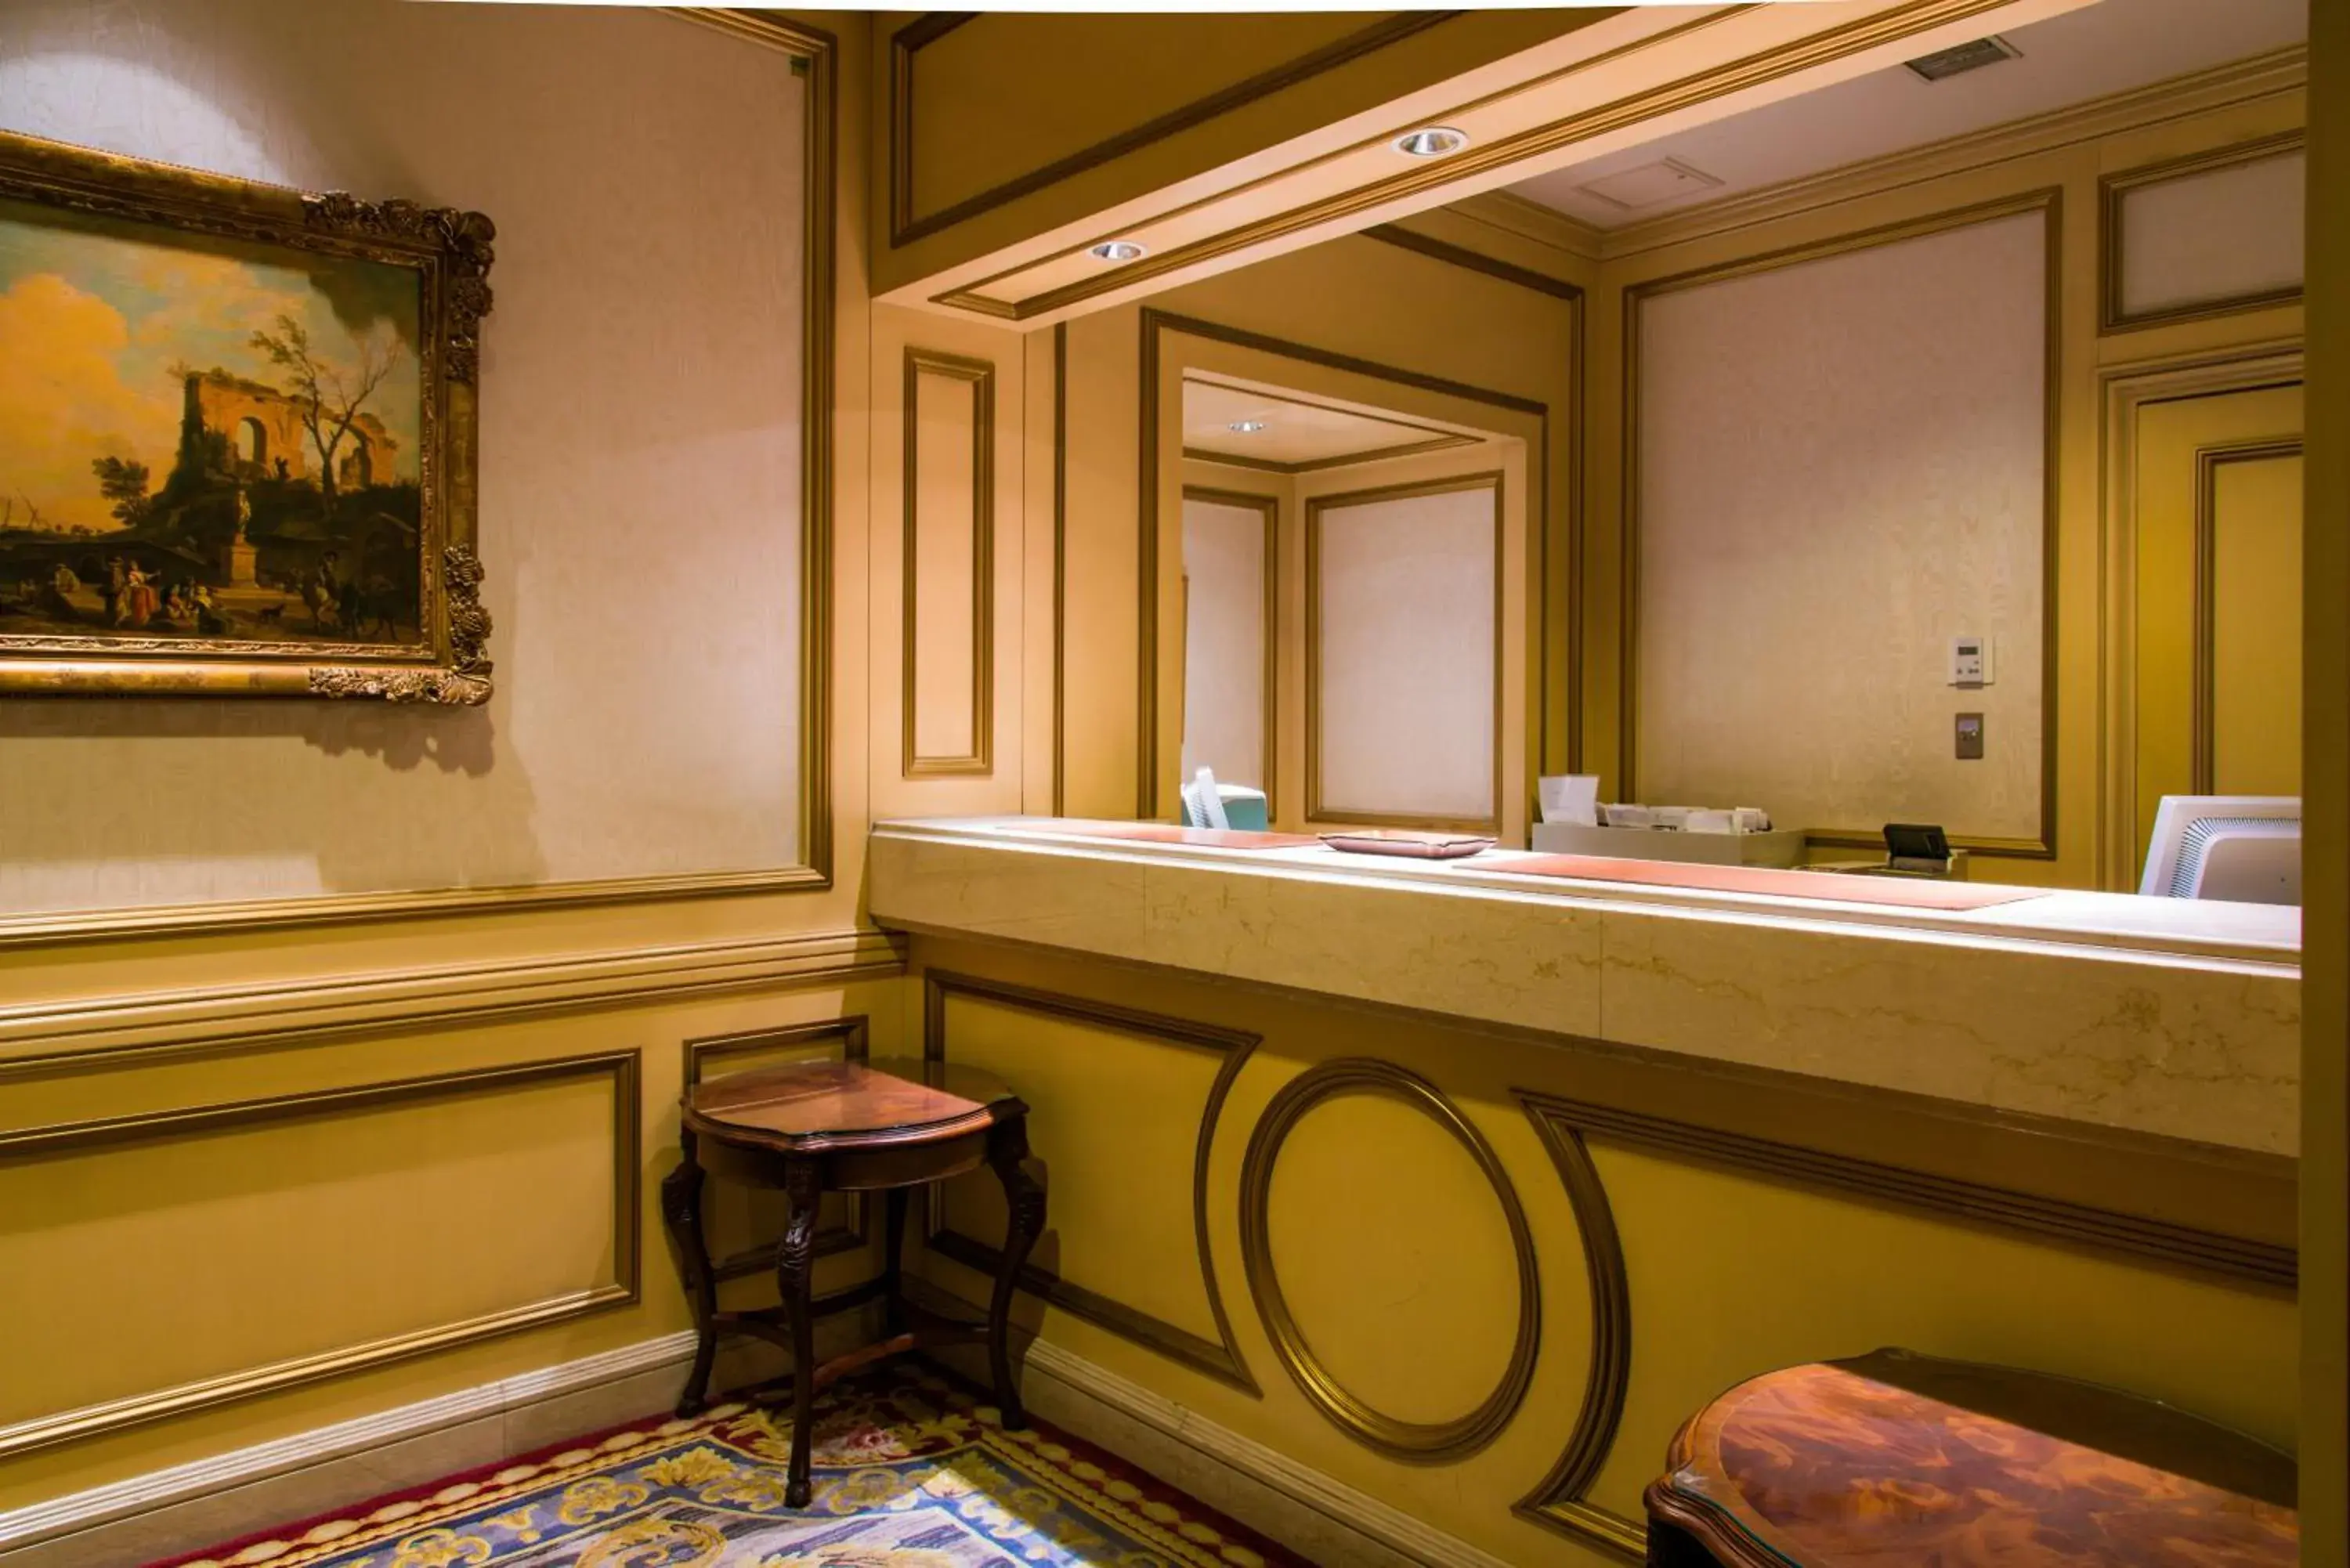 Lobby or reception, Bathroom in Rihga Royal Hotel Tokyo